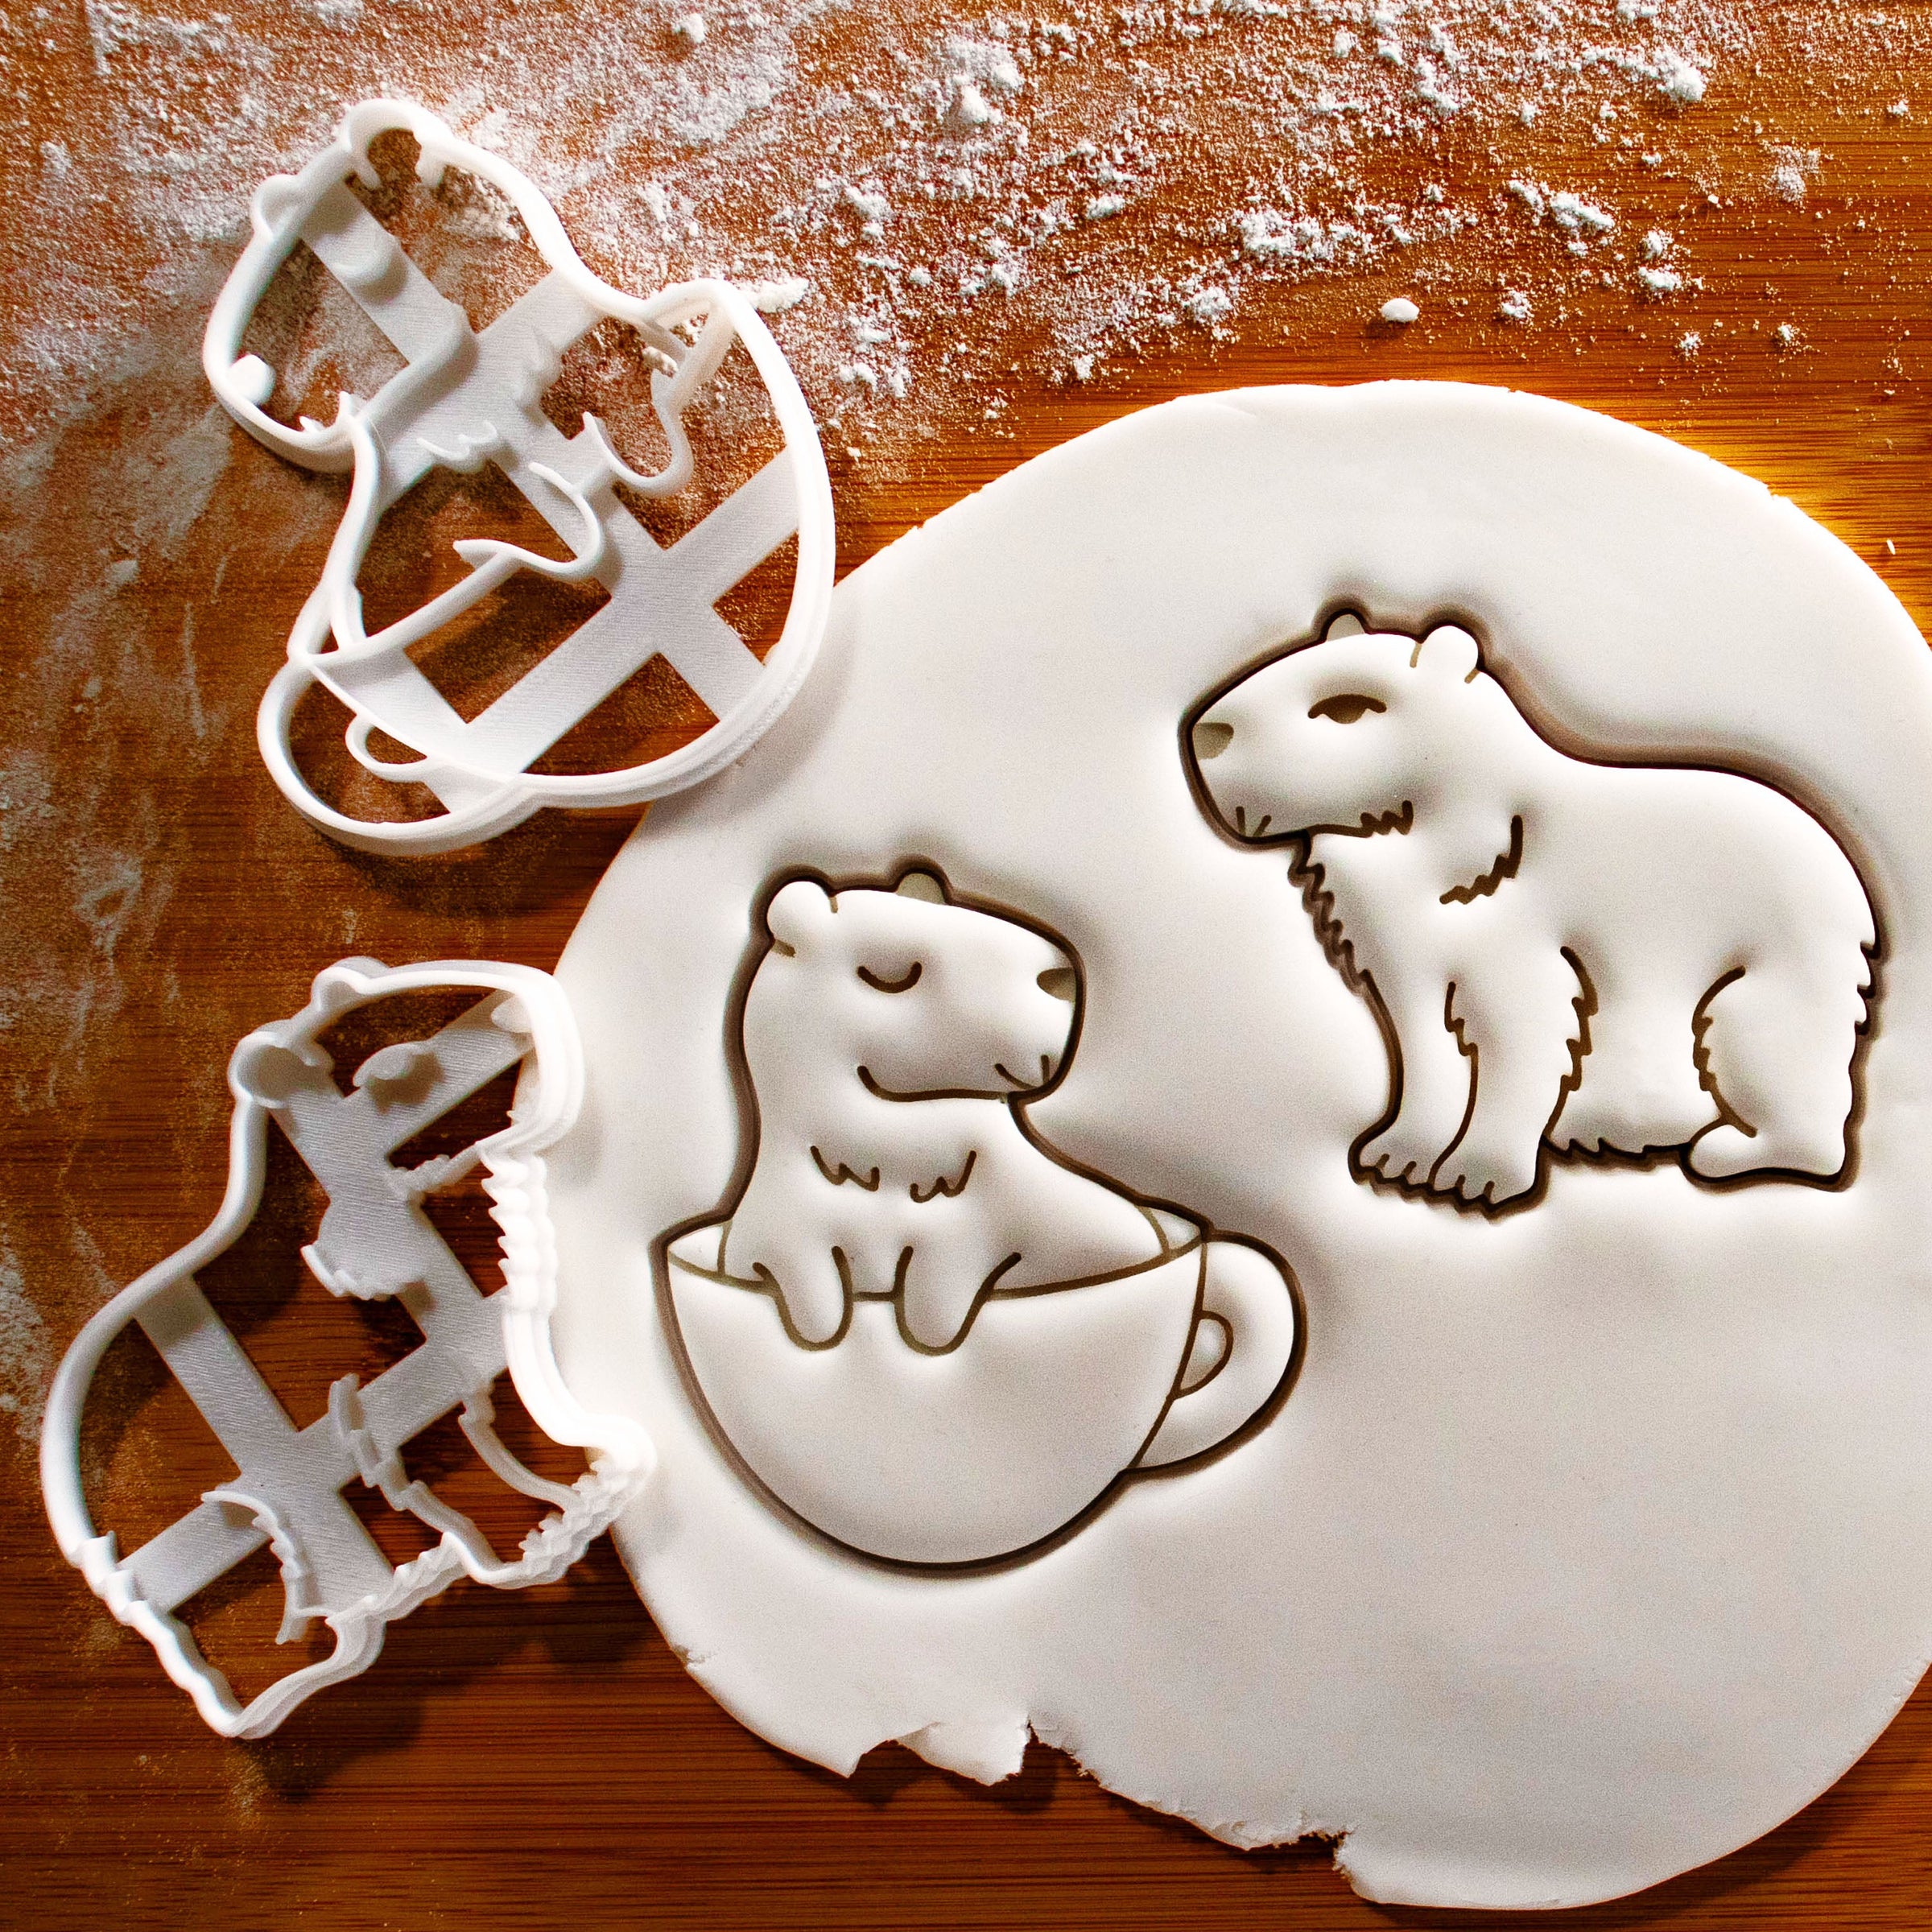 PROMO SET: Set of 2 Capybara Cookie Cutters